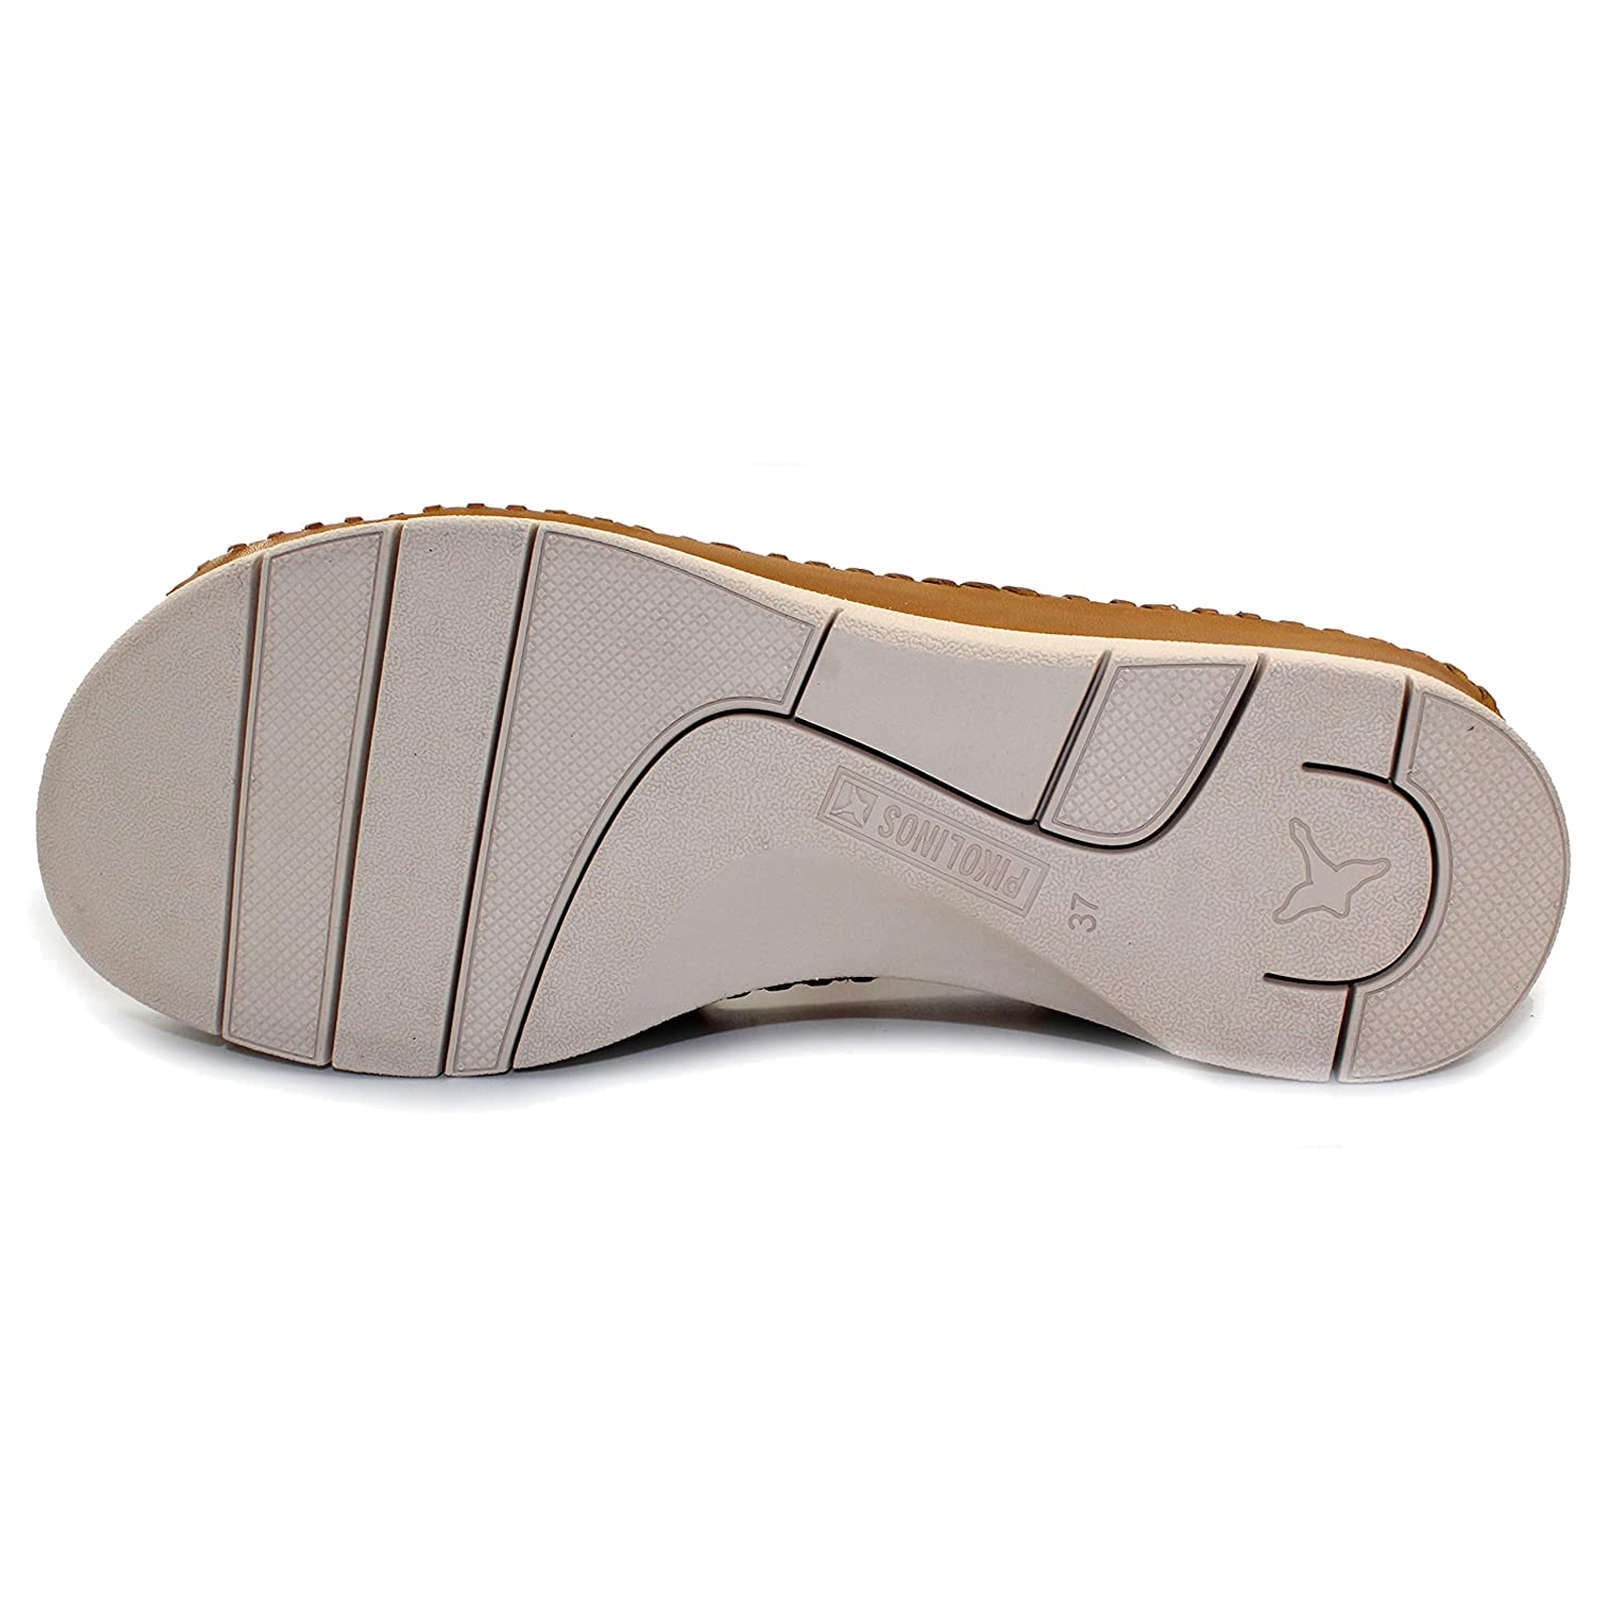 Pikolinos Altea Leather Womens Sandals#color_honey